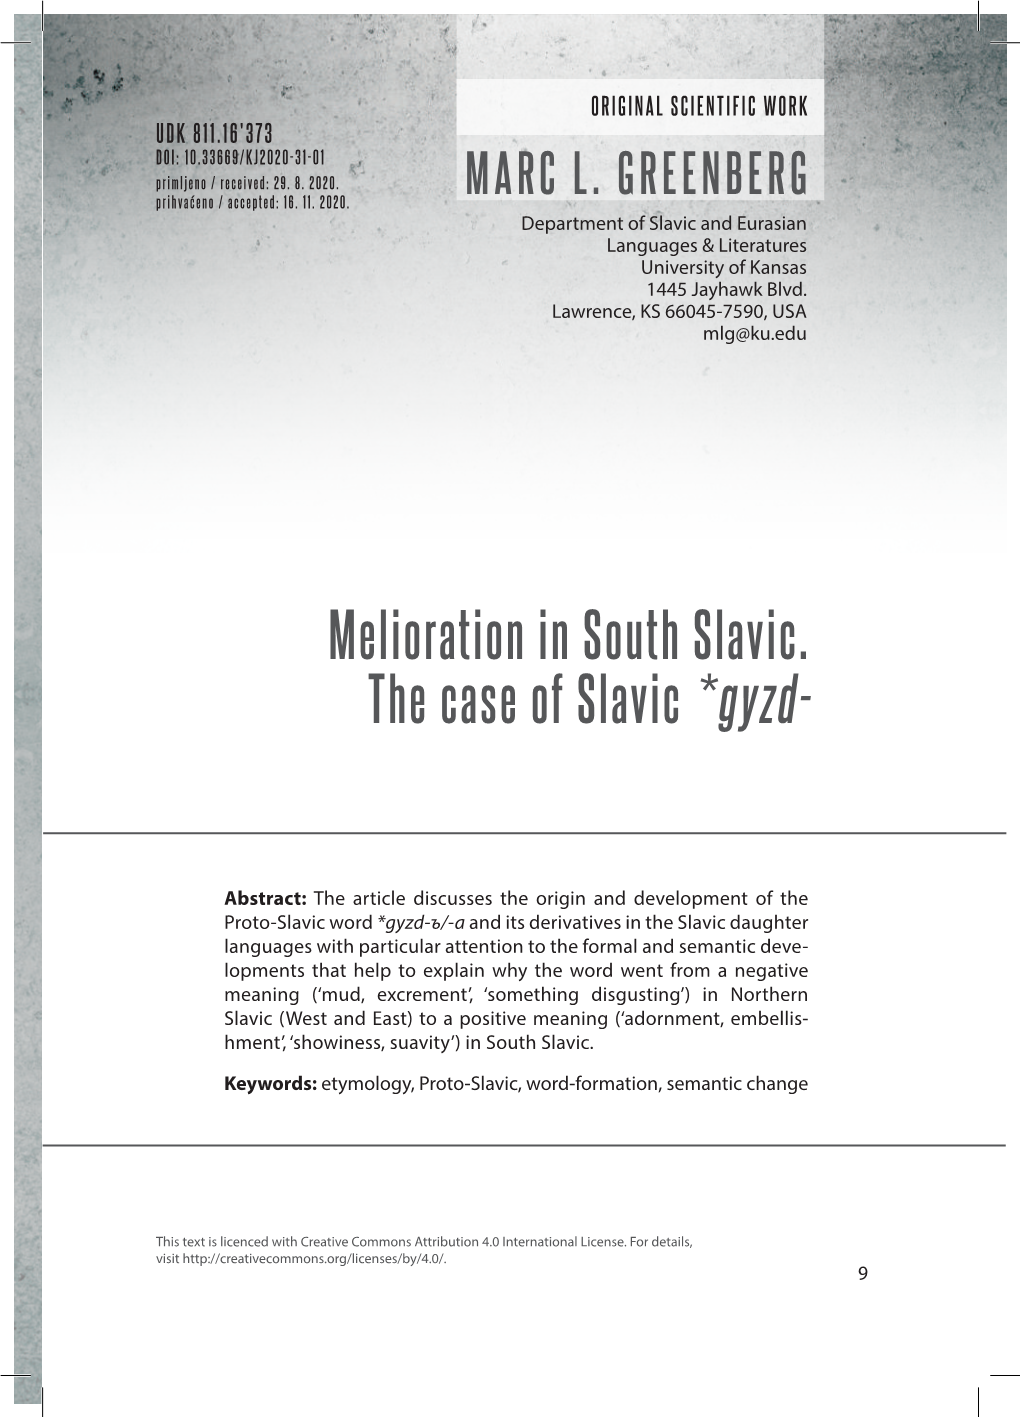 Melioration in South Slavic. the Case of Slavic *Gyzd